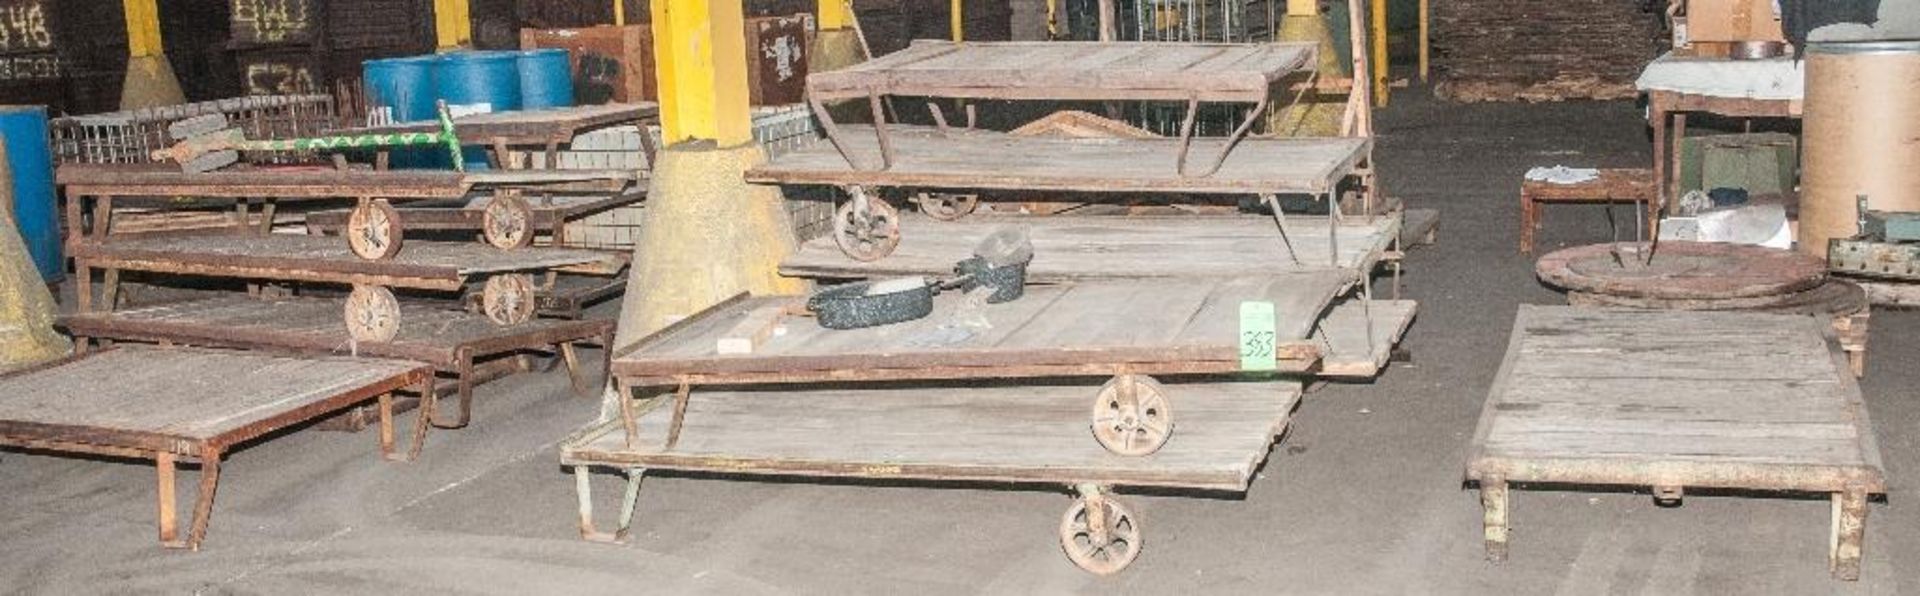 Pallet Carts, conveyor, racks